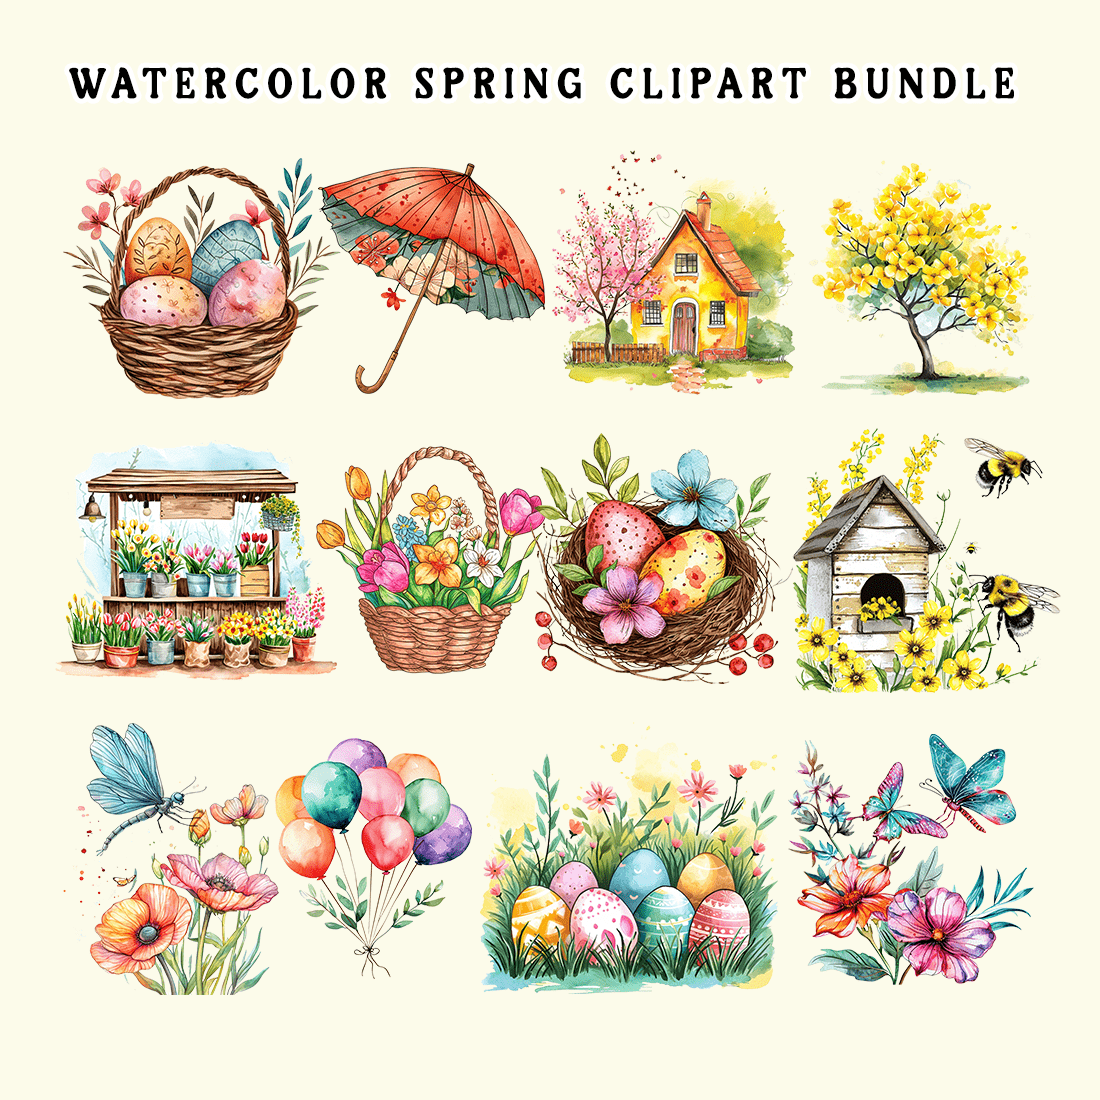 Watercolor Spring Clipart Bundle preview image.